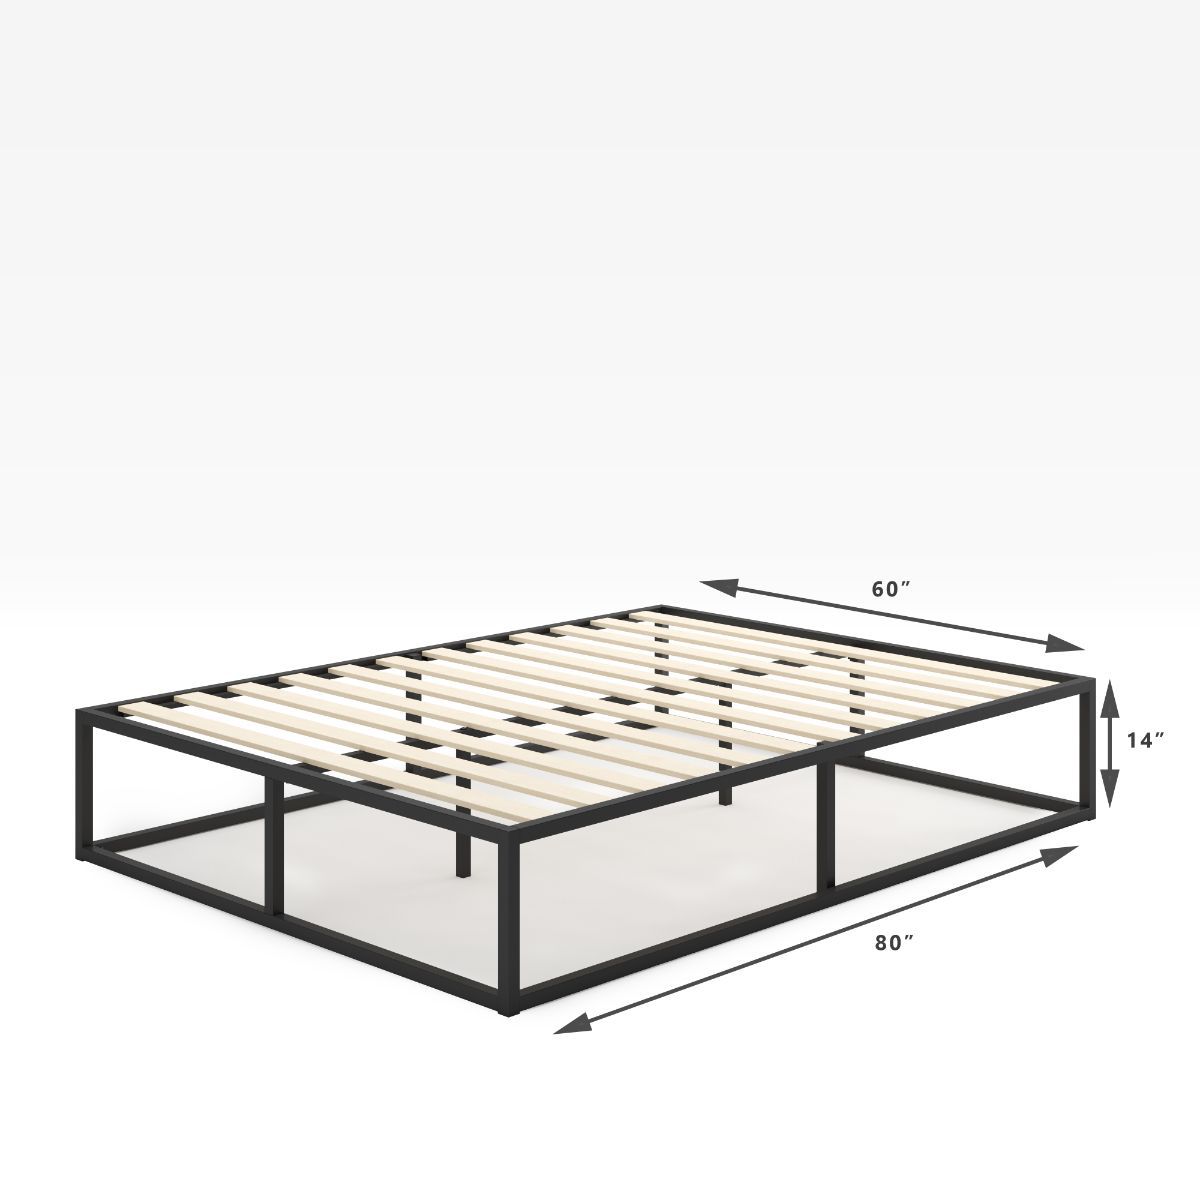 14 inch Joseph Metal Platform Bed Quarter Dimensions